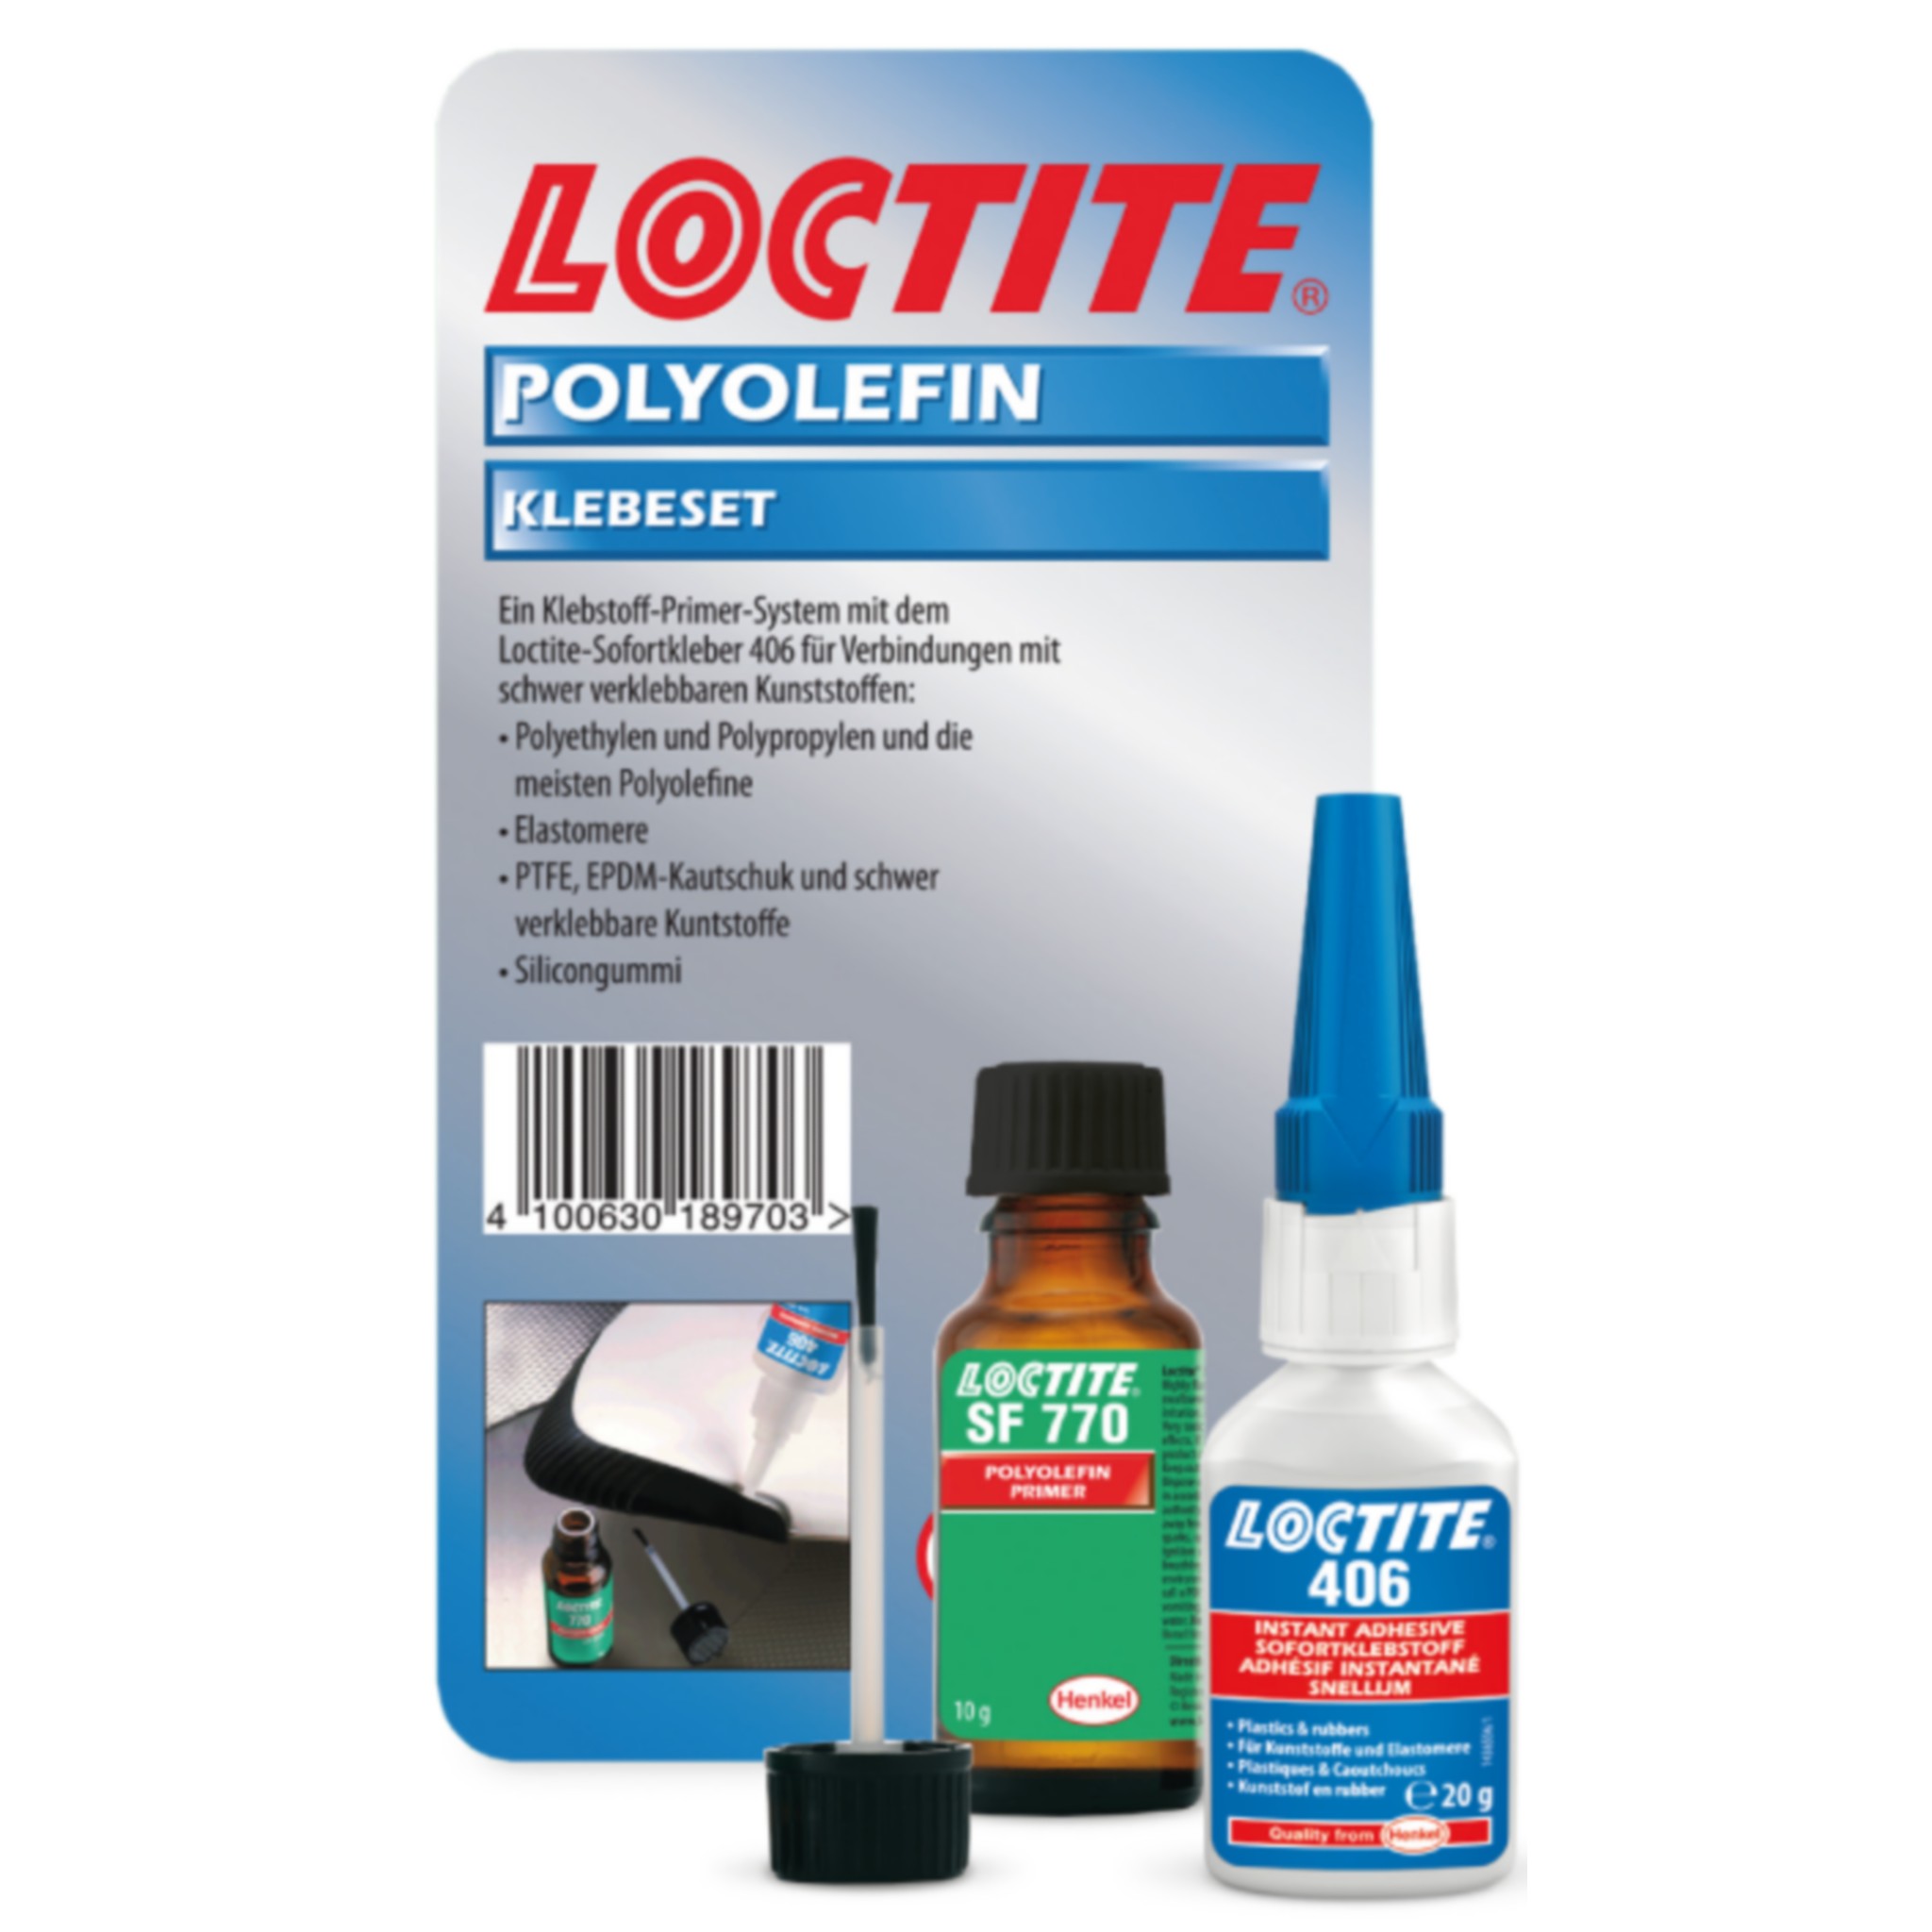 LOCTITE 406 / LOCTITE SF 770 SET - Sofortklebstoff - Henkel Adhesives